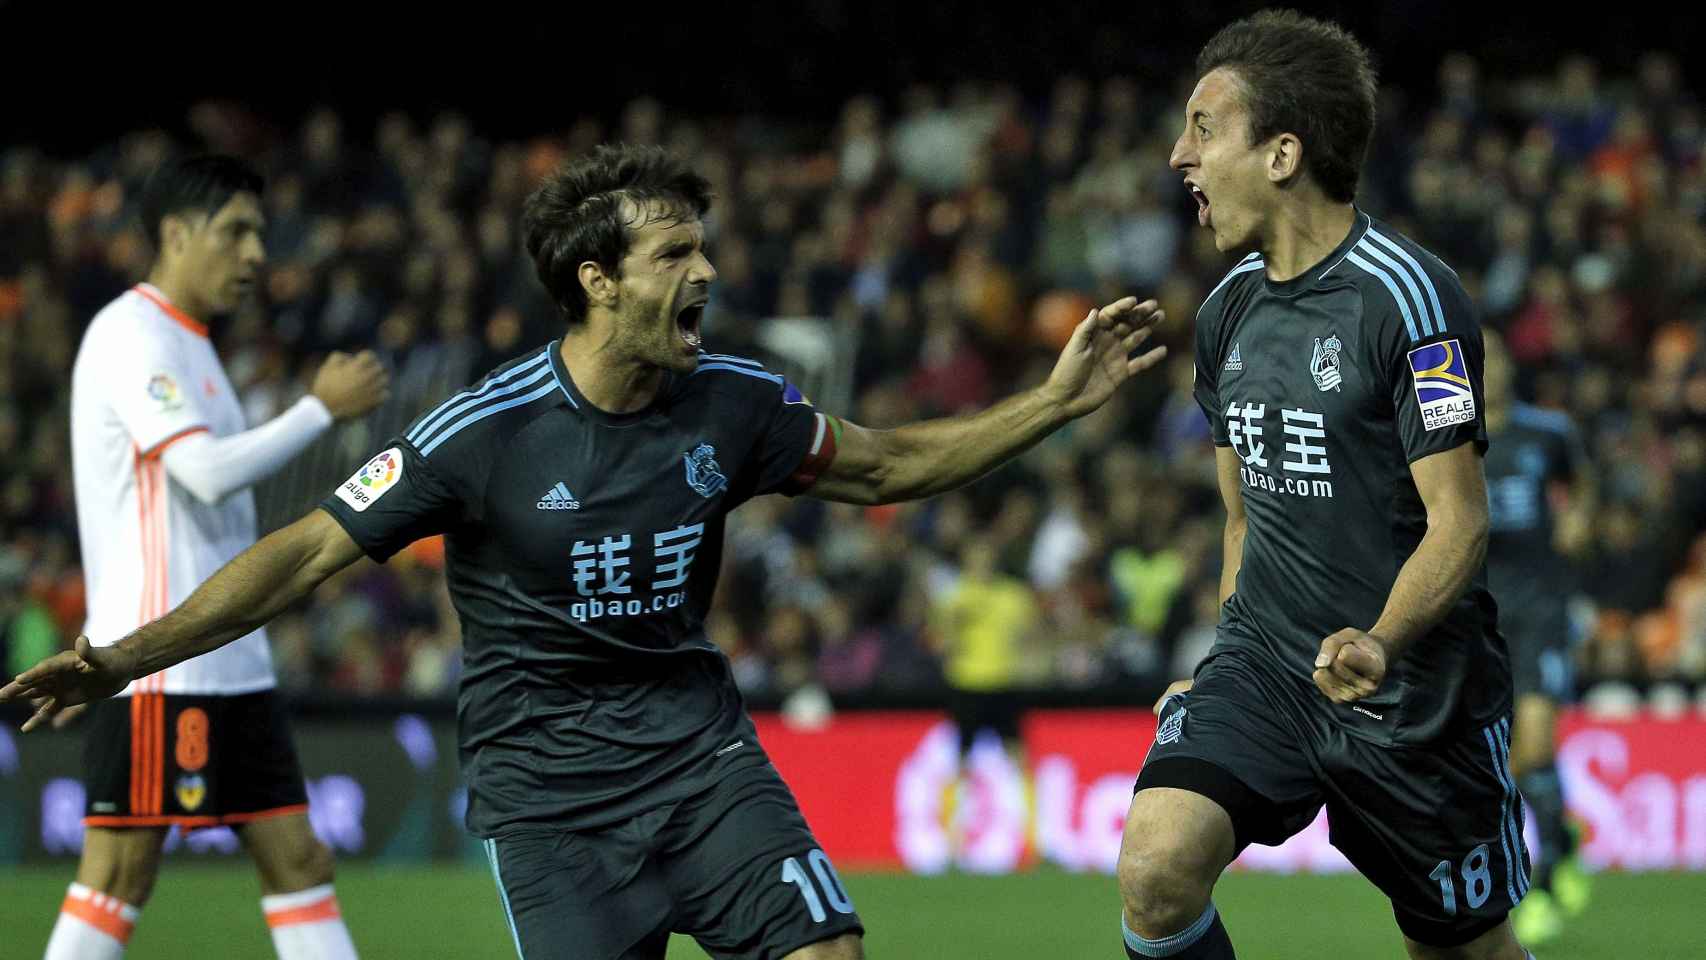 Xabi Prieto celebra con Oyarzabal un gol en Mestalla.